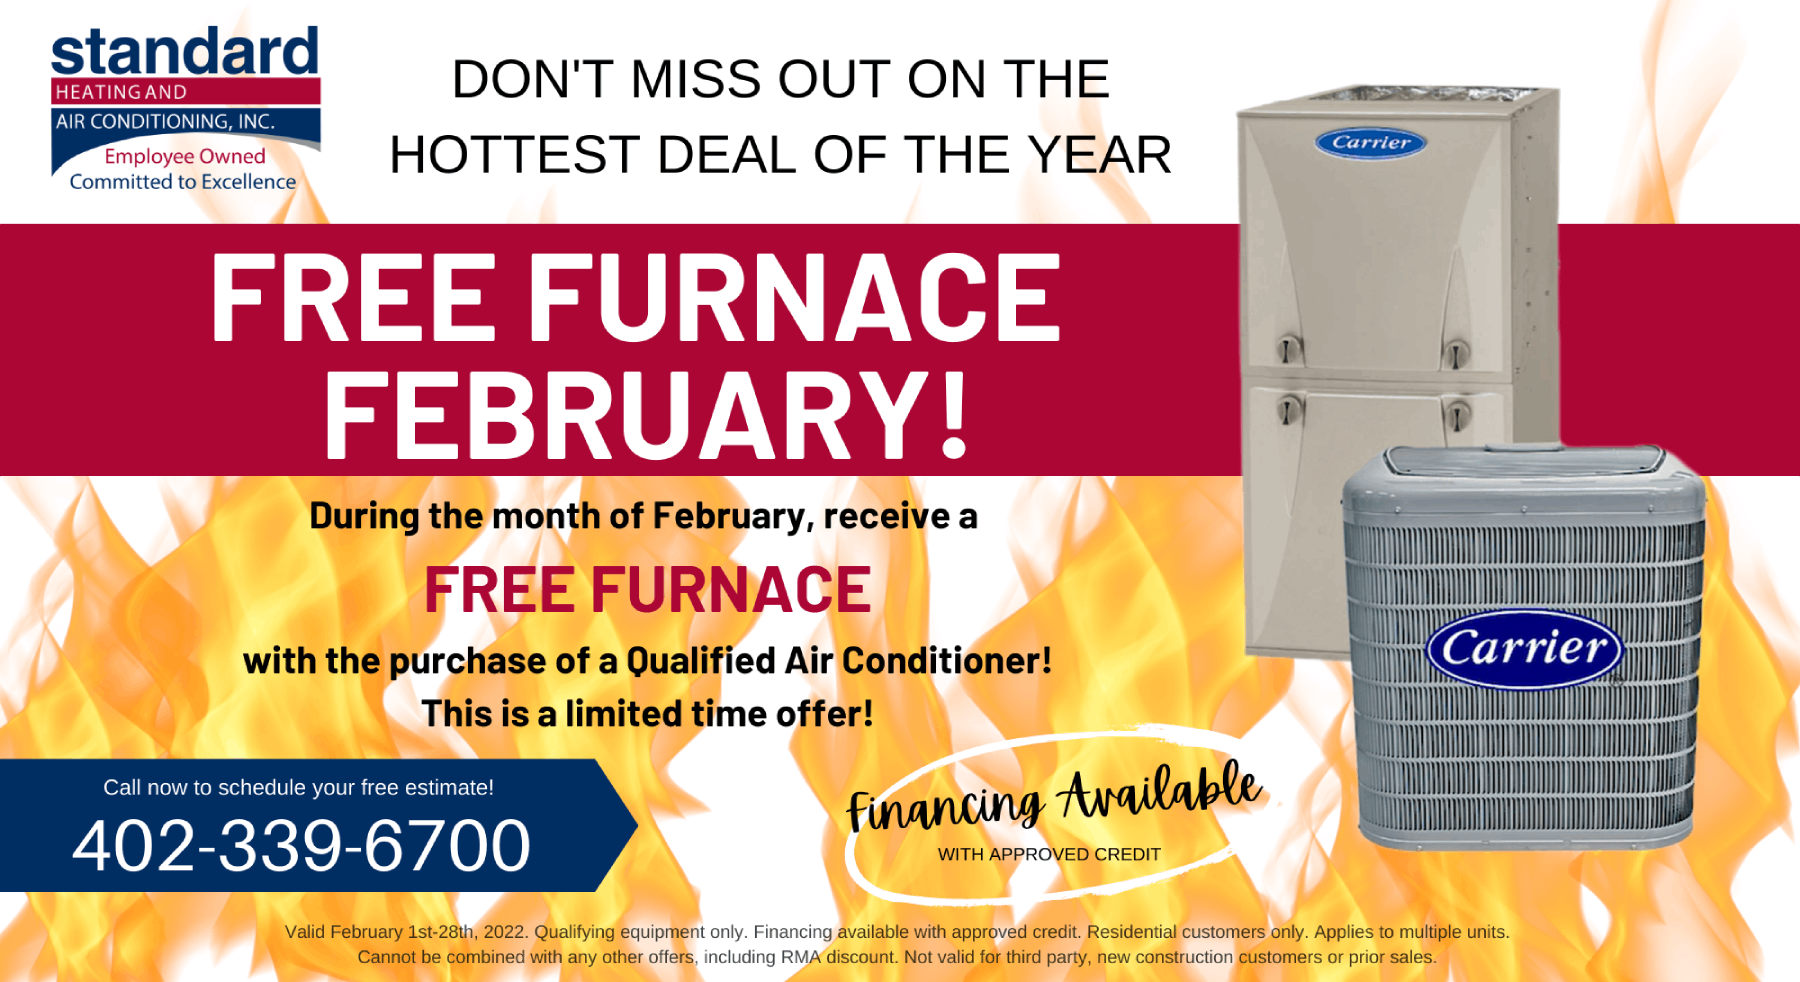 Free Furnace February